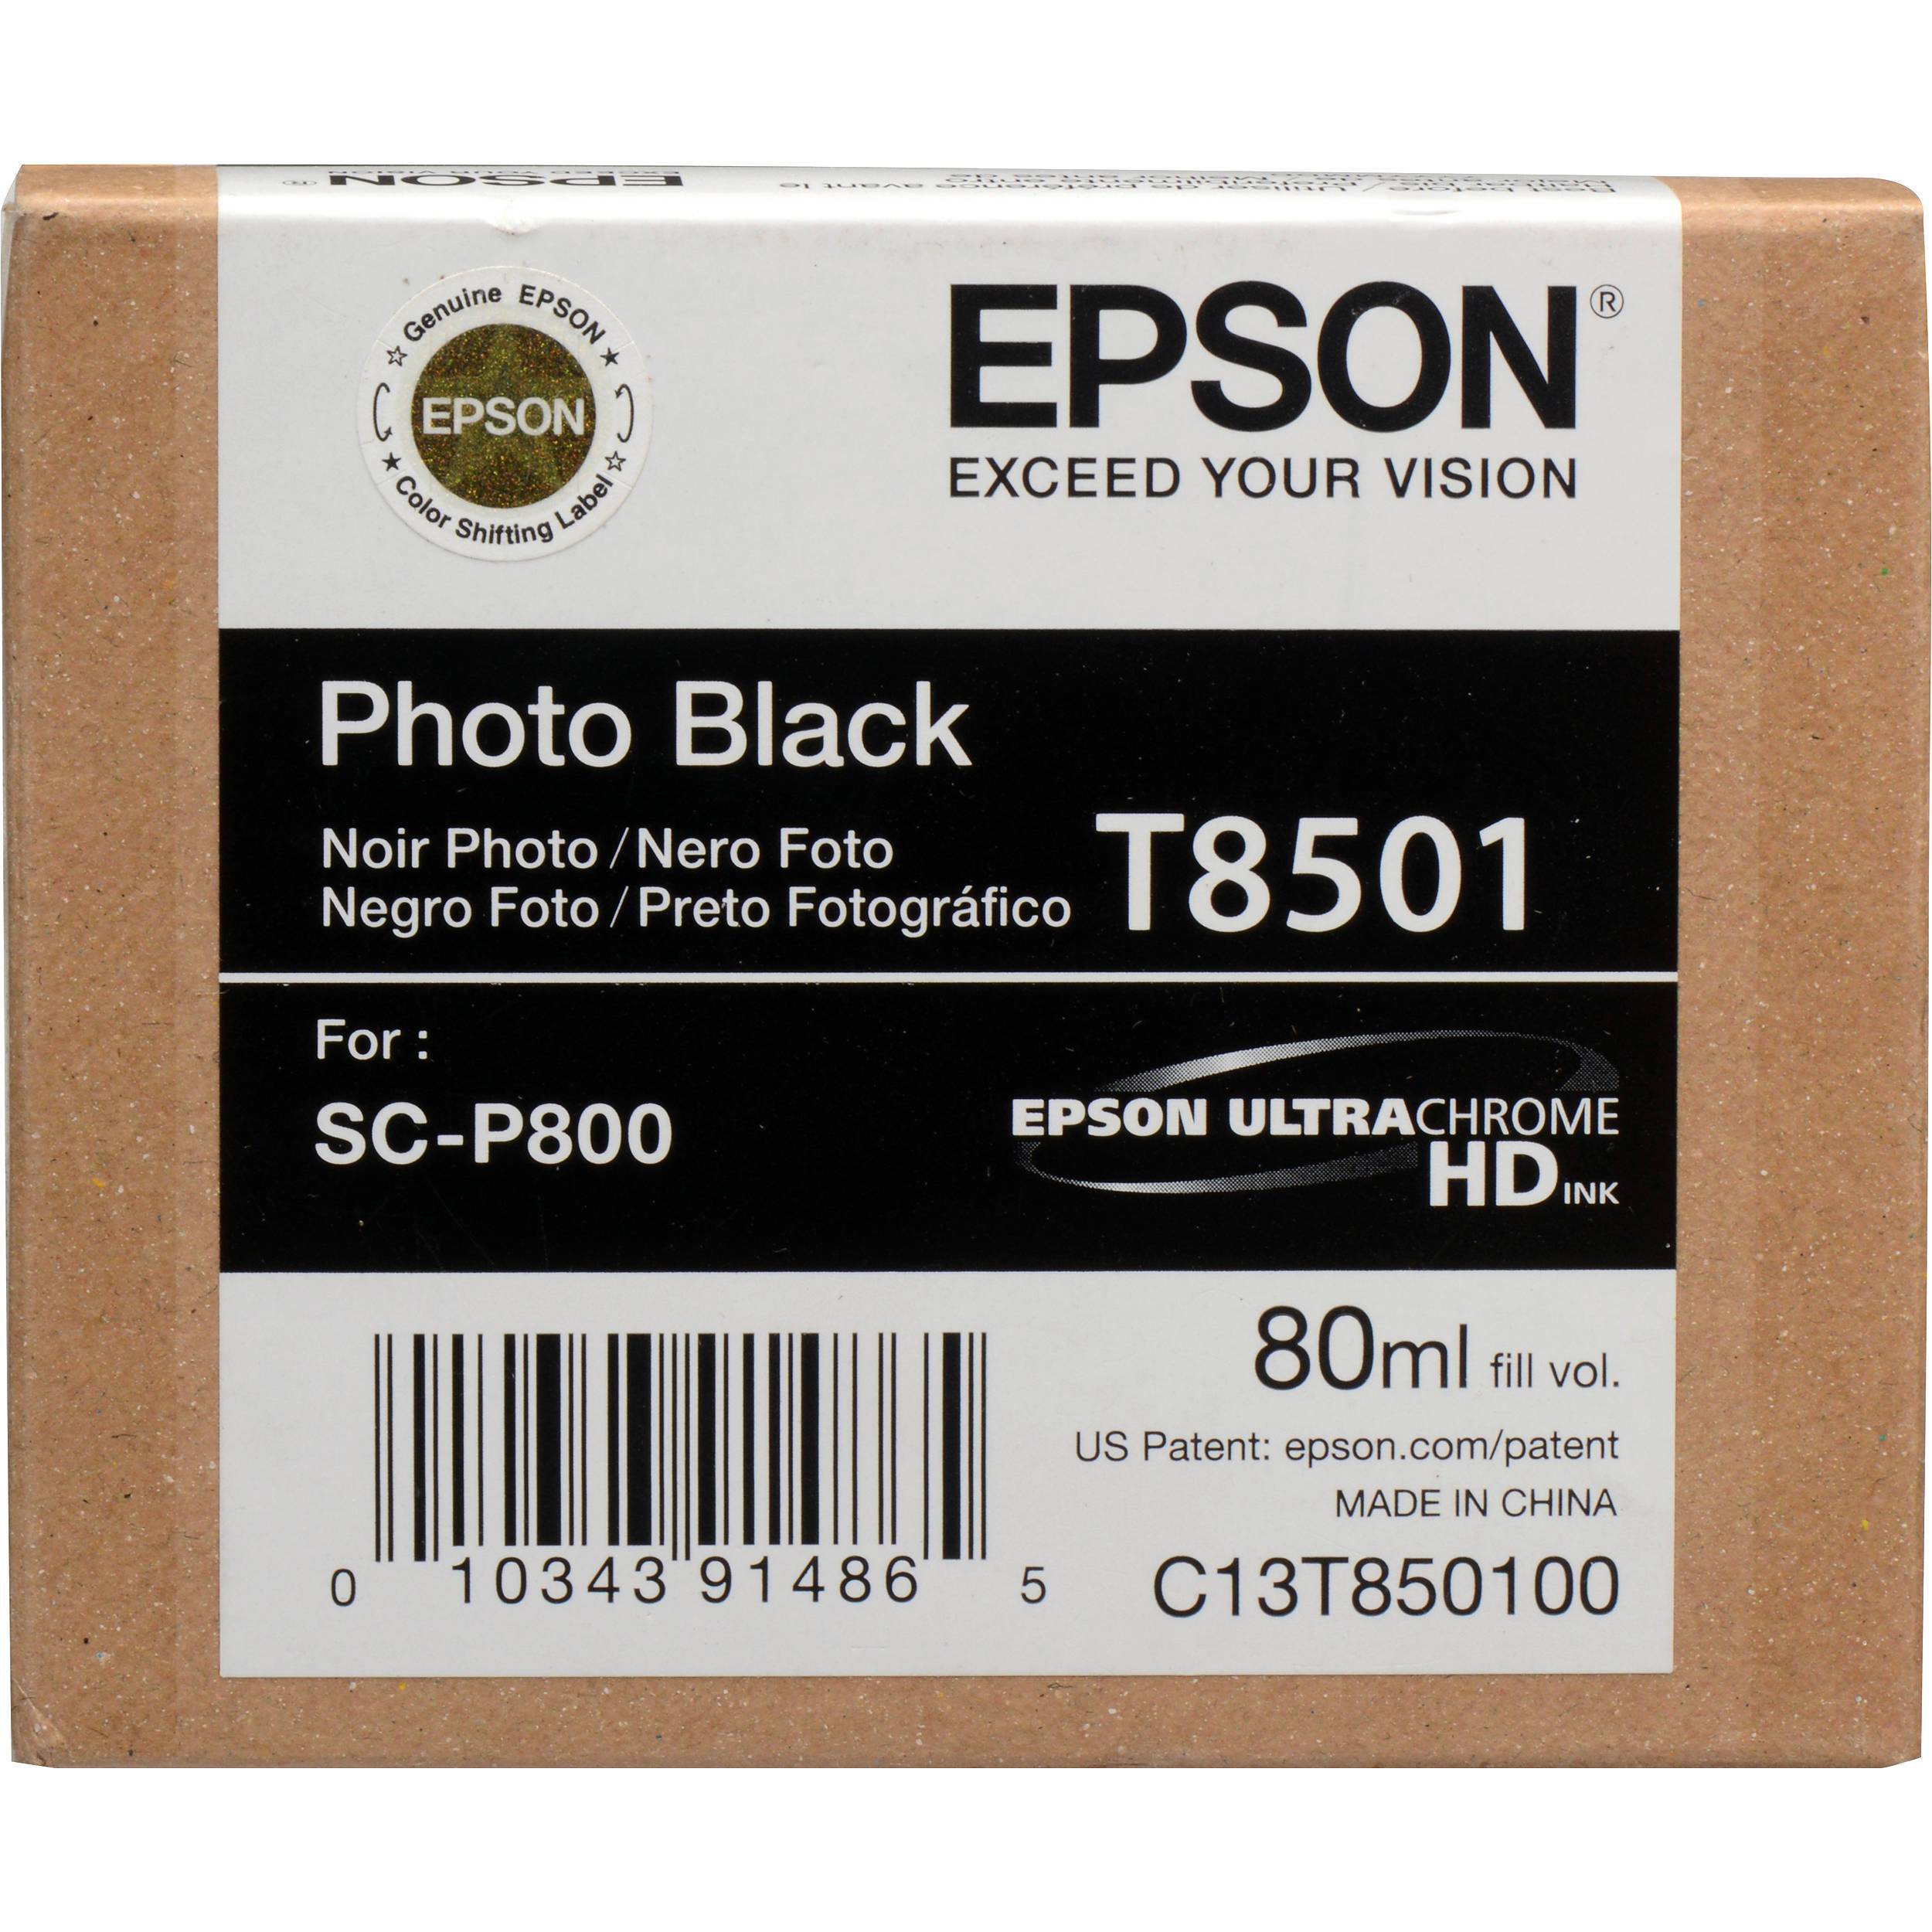 Absolute Toner T850100 EPSON ULTRACHROME HD PHOTO BLACK INK 80ML/SURECOLOR Epson Ink Cartridges